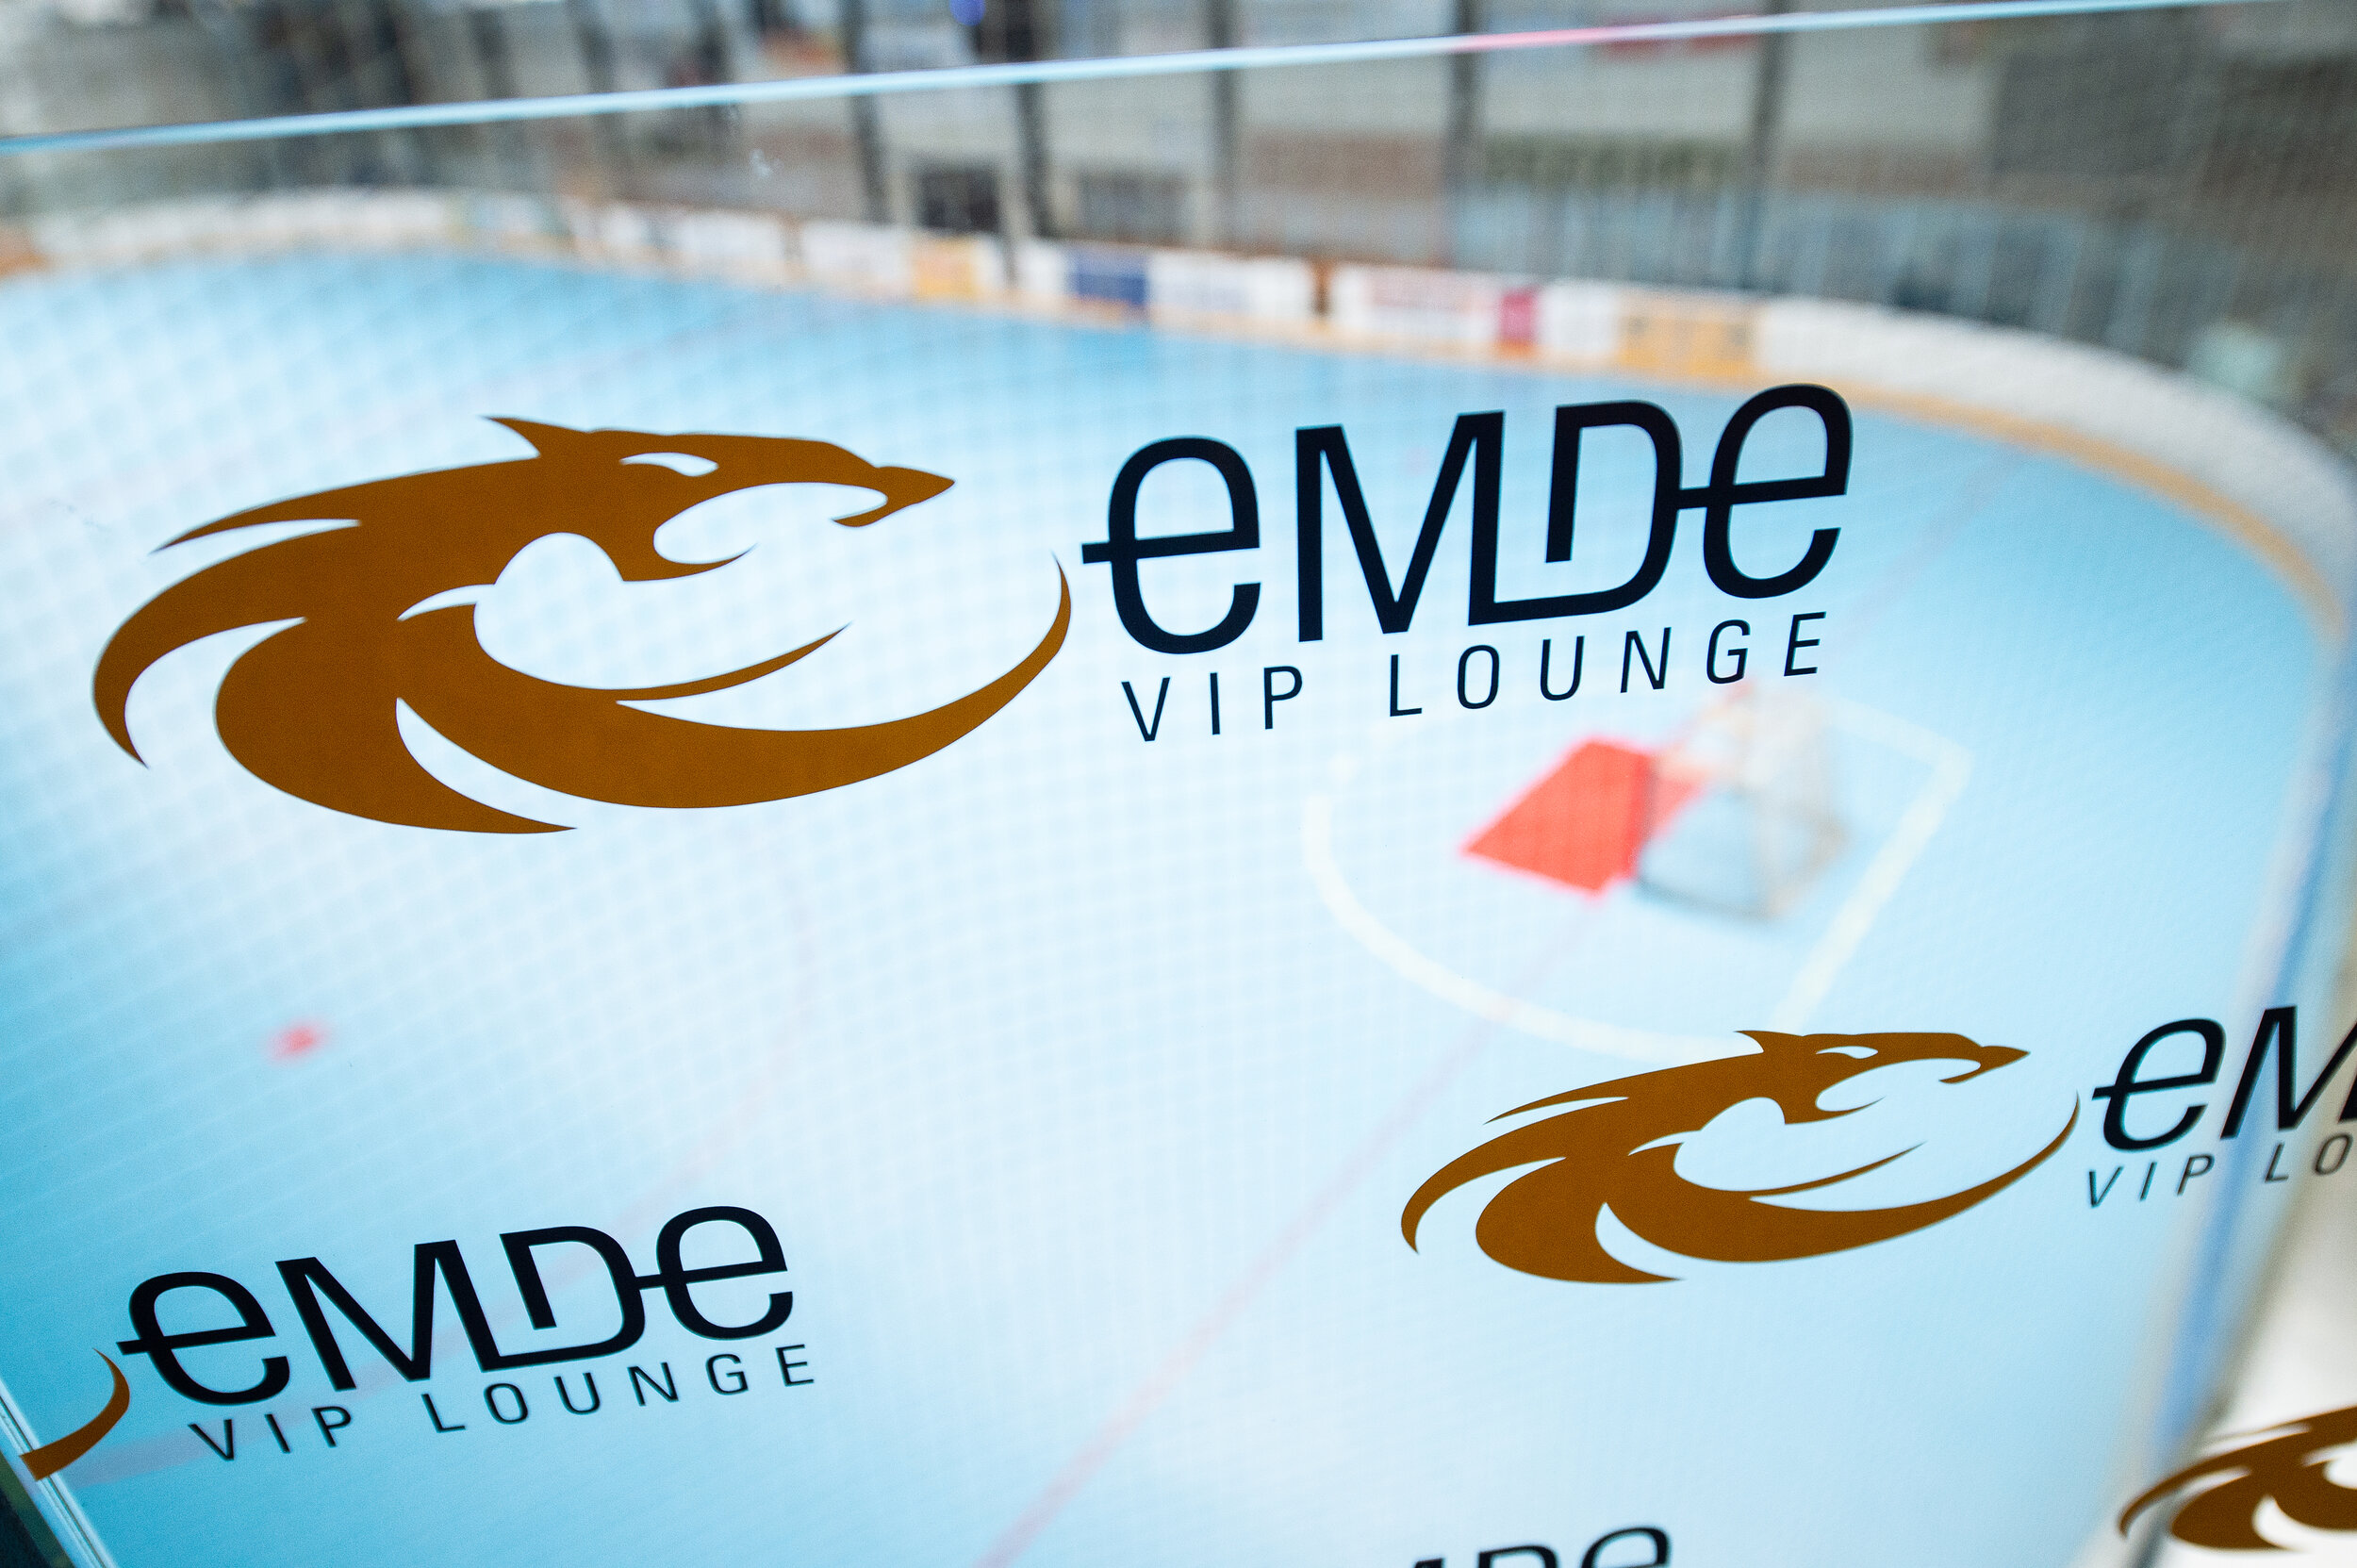 eMDe VIP Lounge